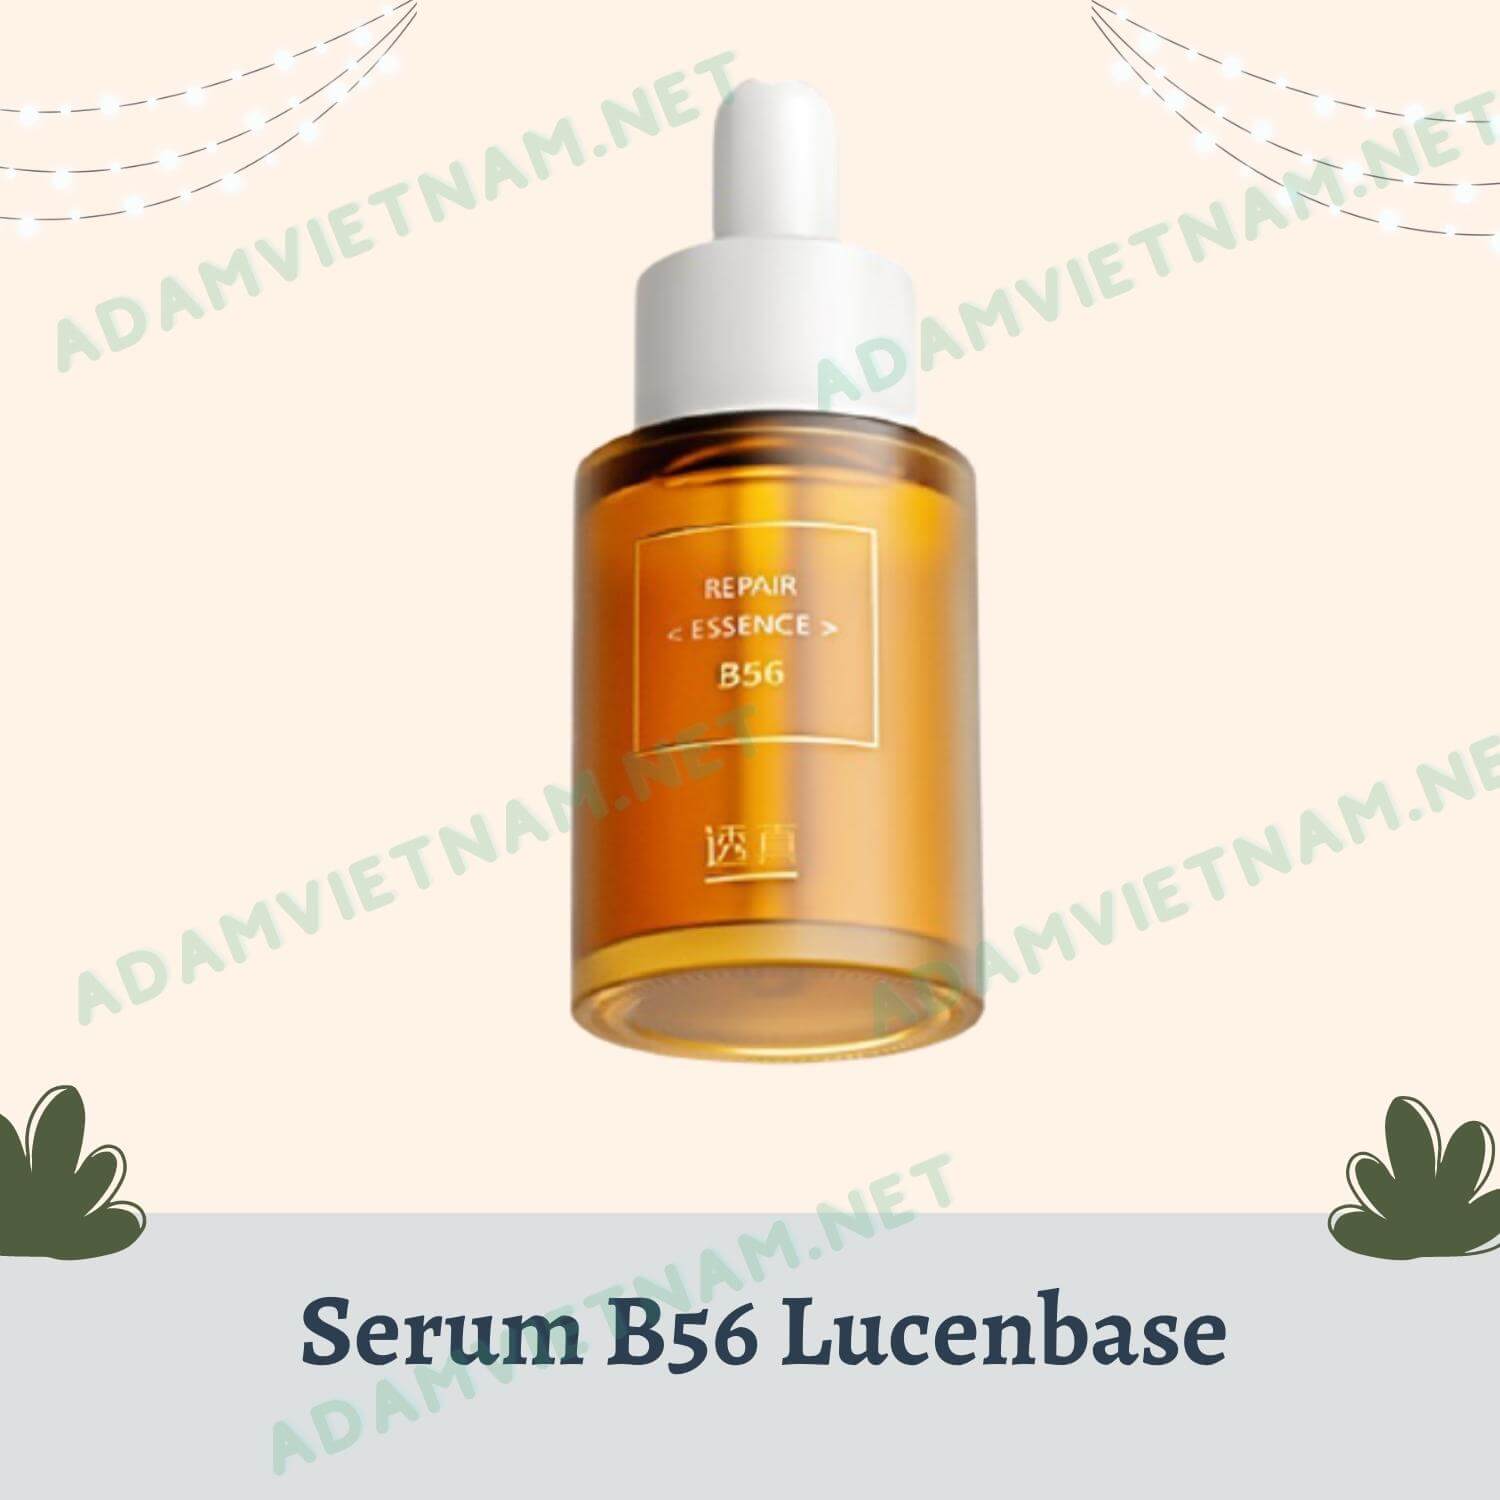 Serum B56 Lucenbase